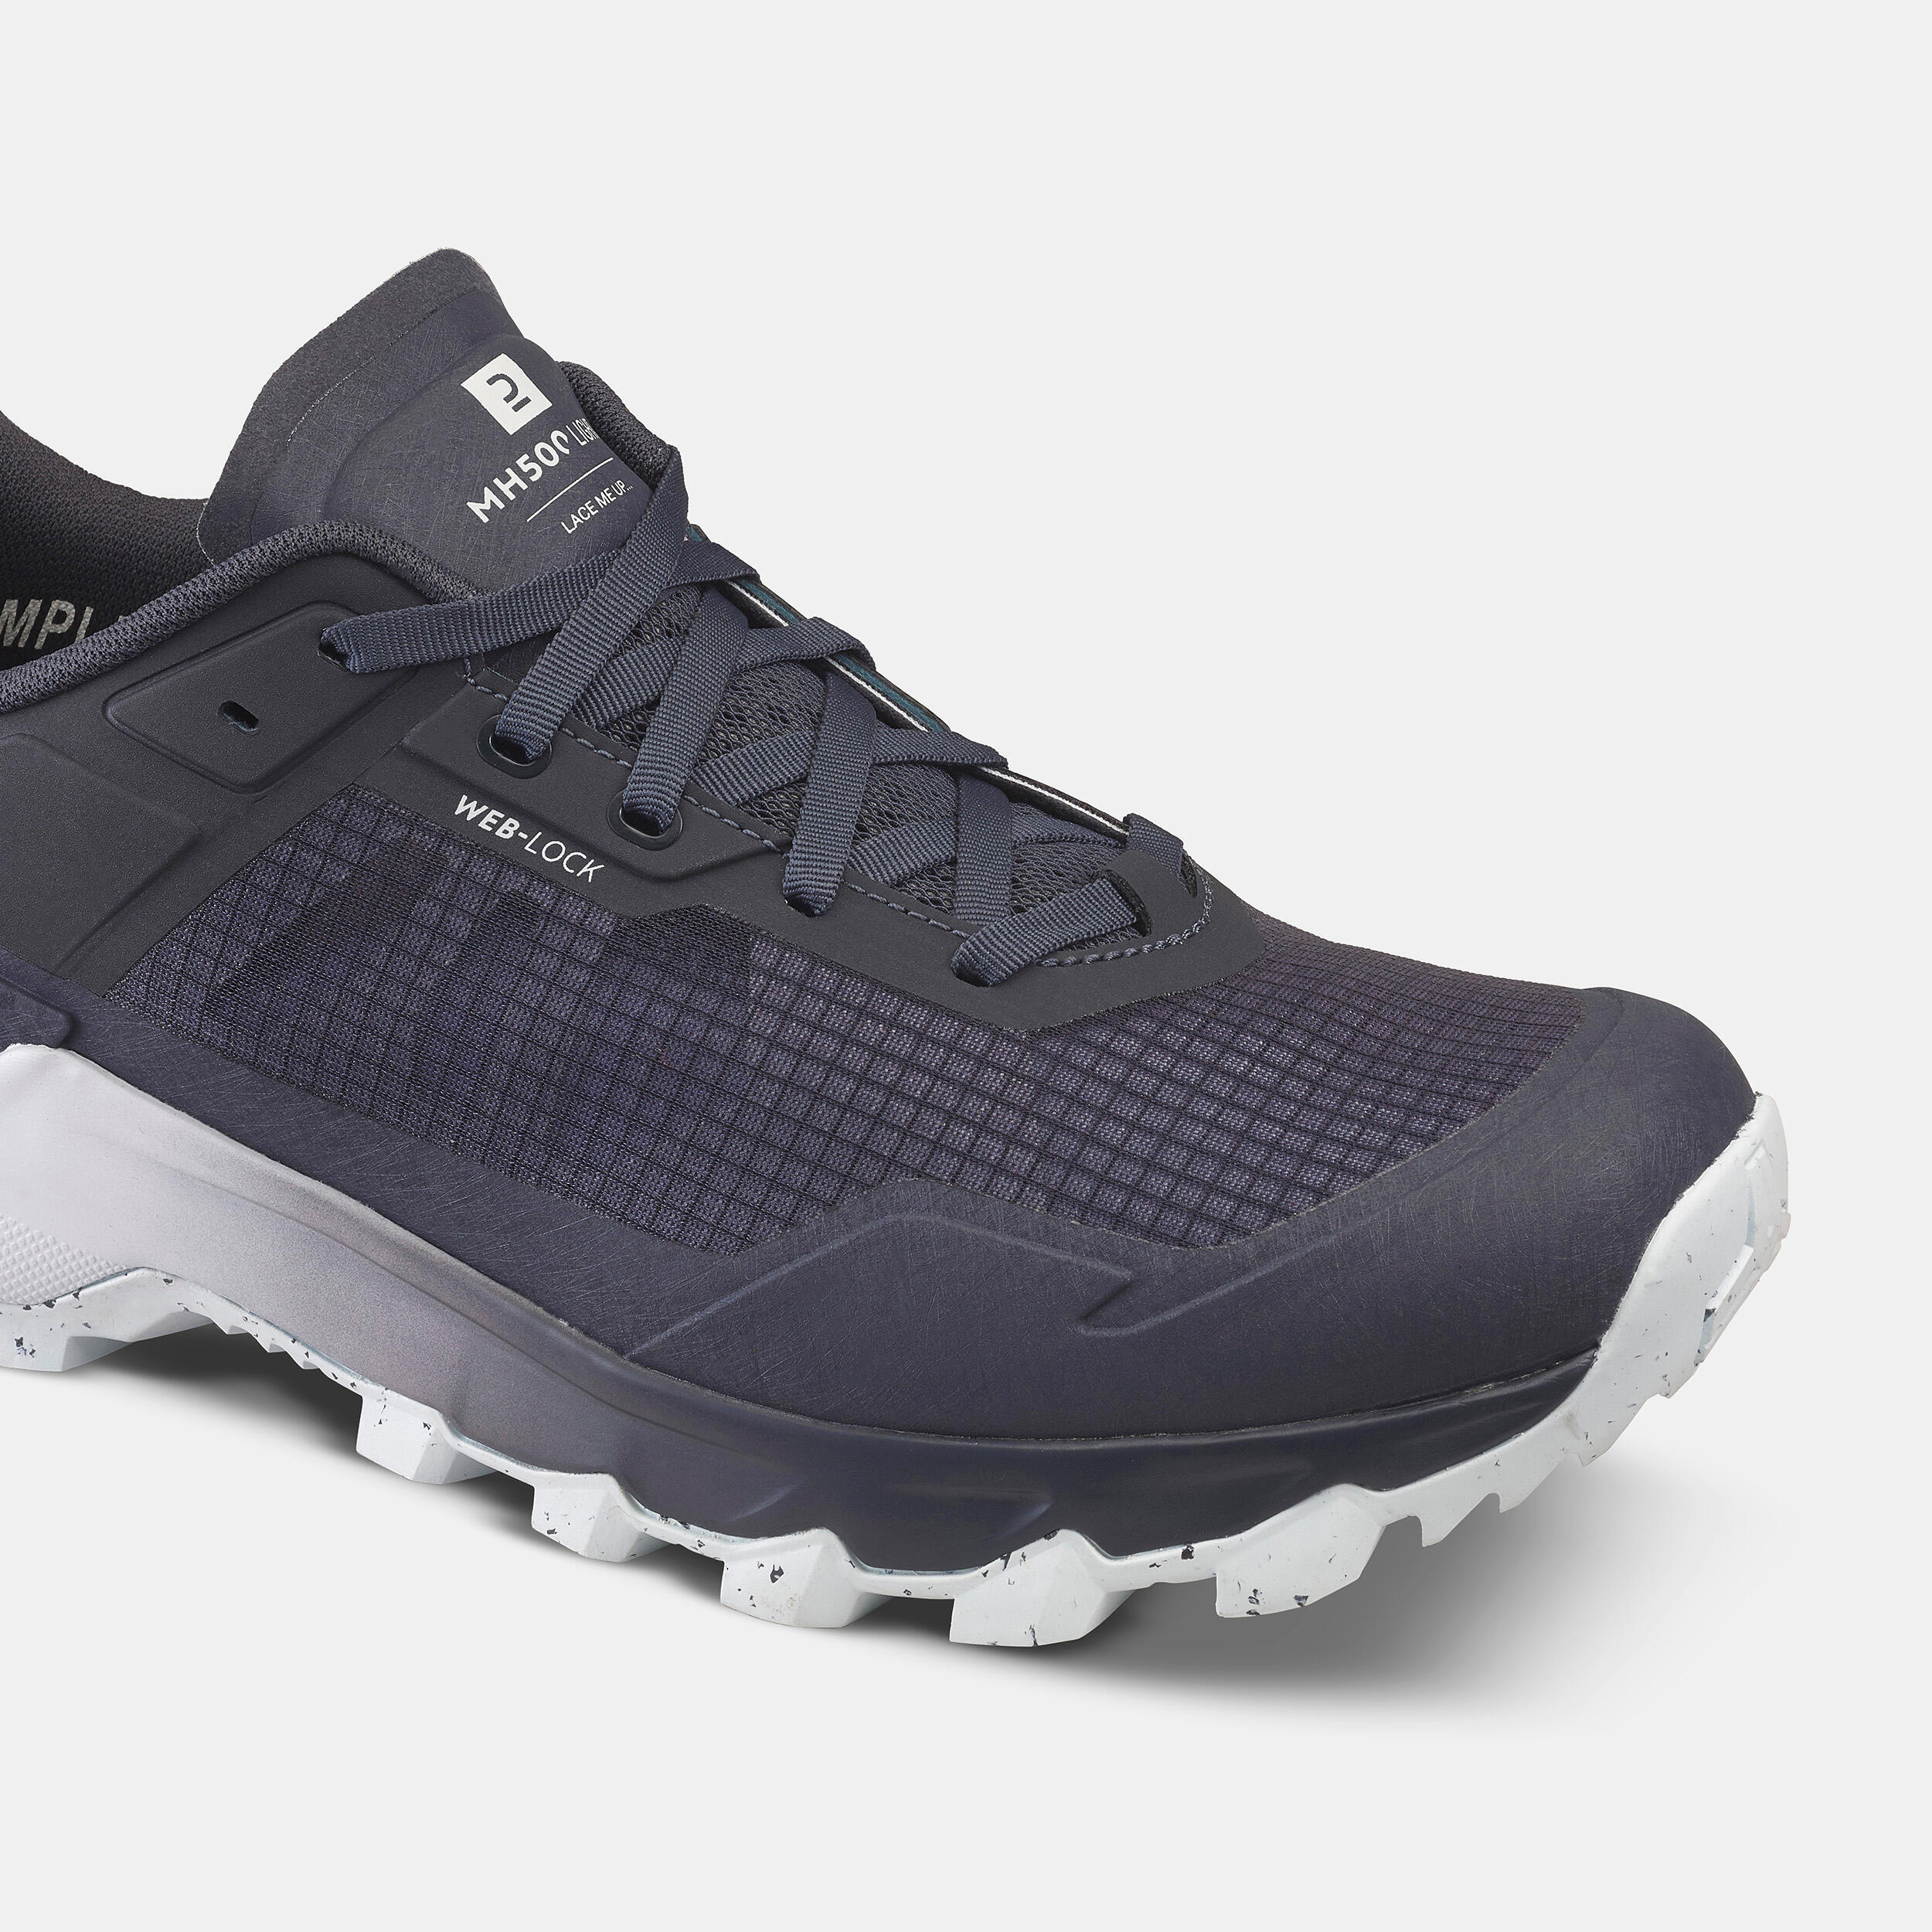 Men's mountain Hiking shoes - MH500 - Grey 5/5